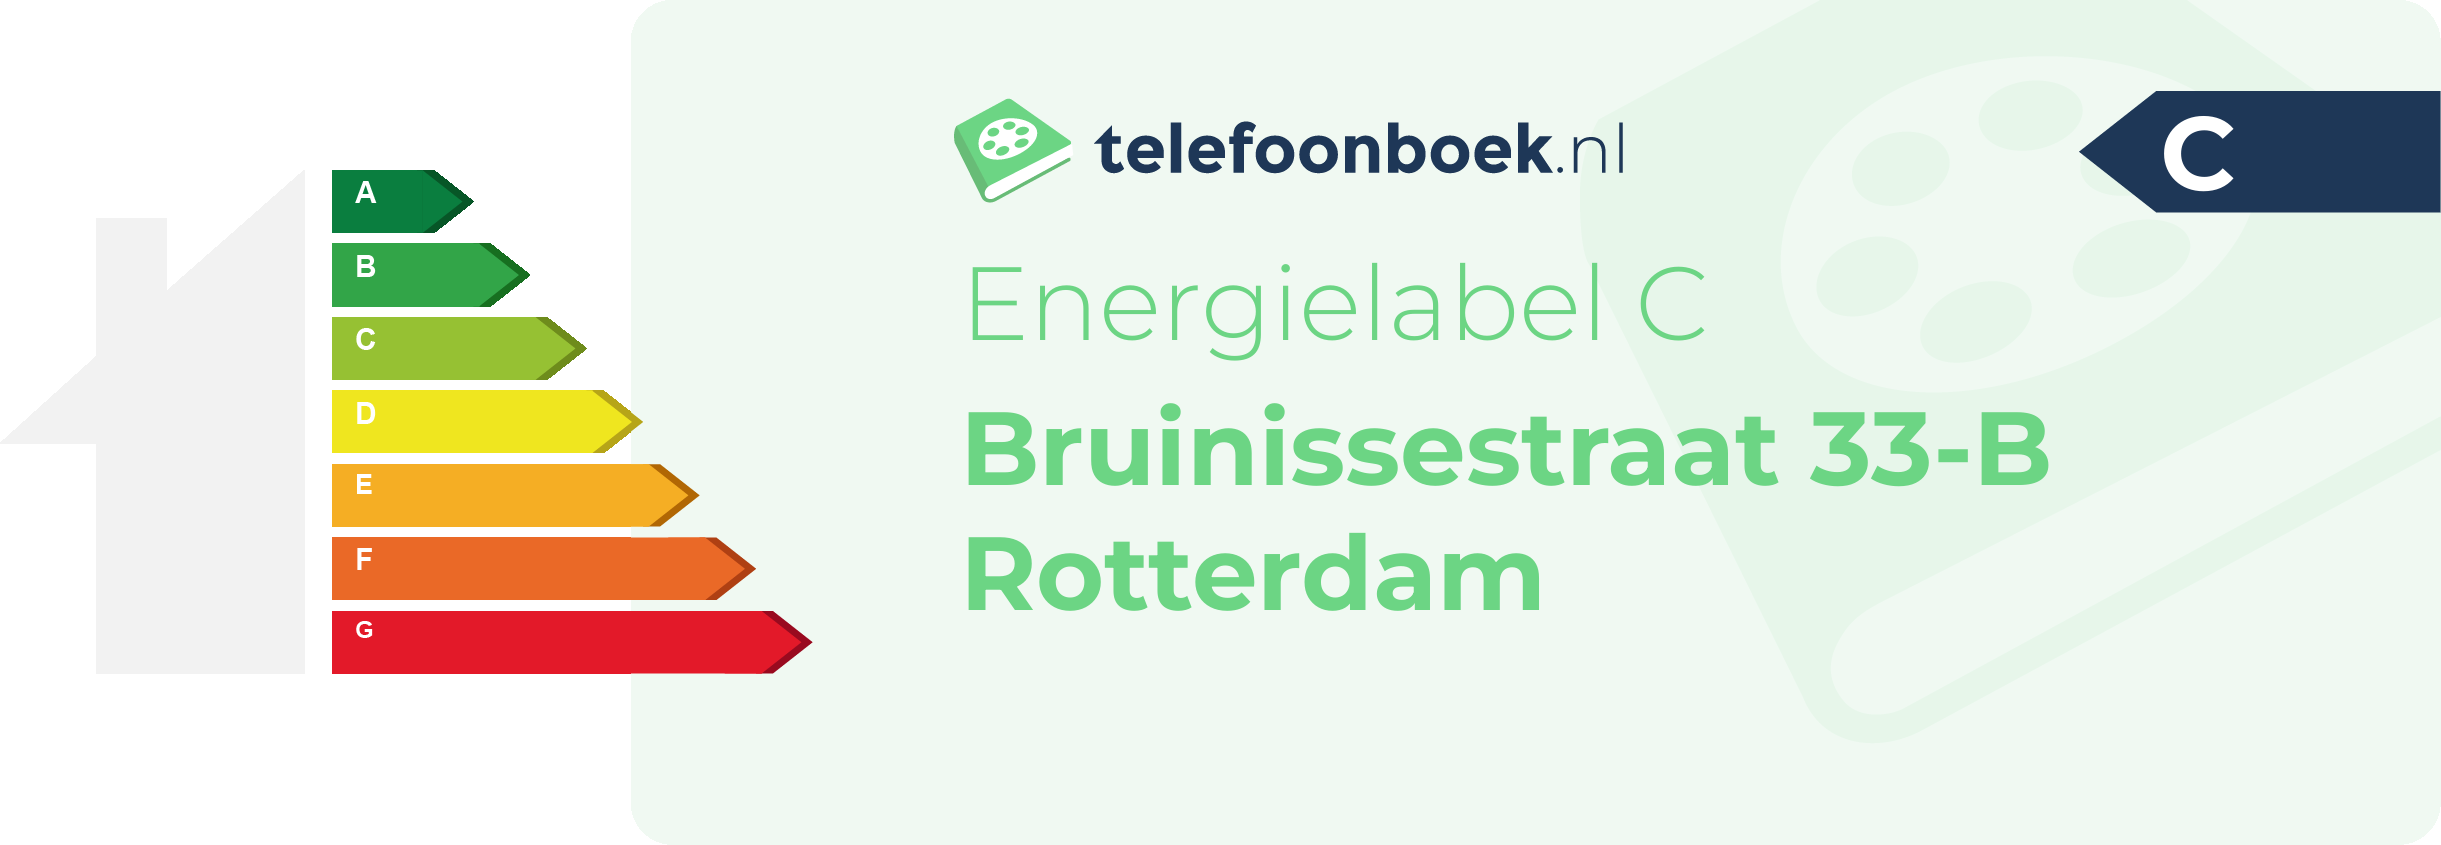 Energielabel Bruinissestraat 33-B Rotterdam